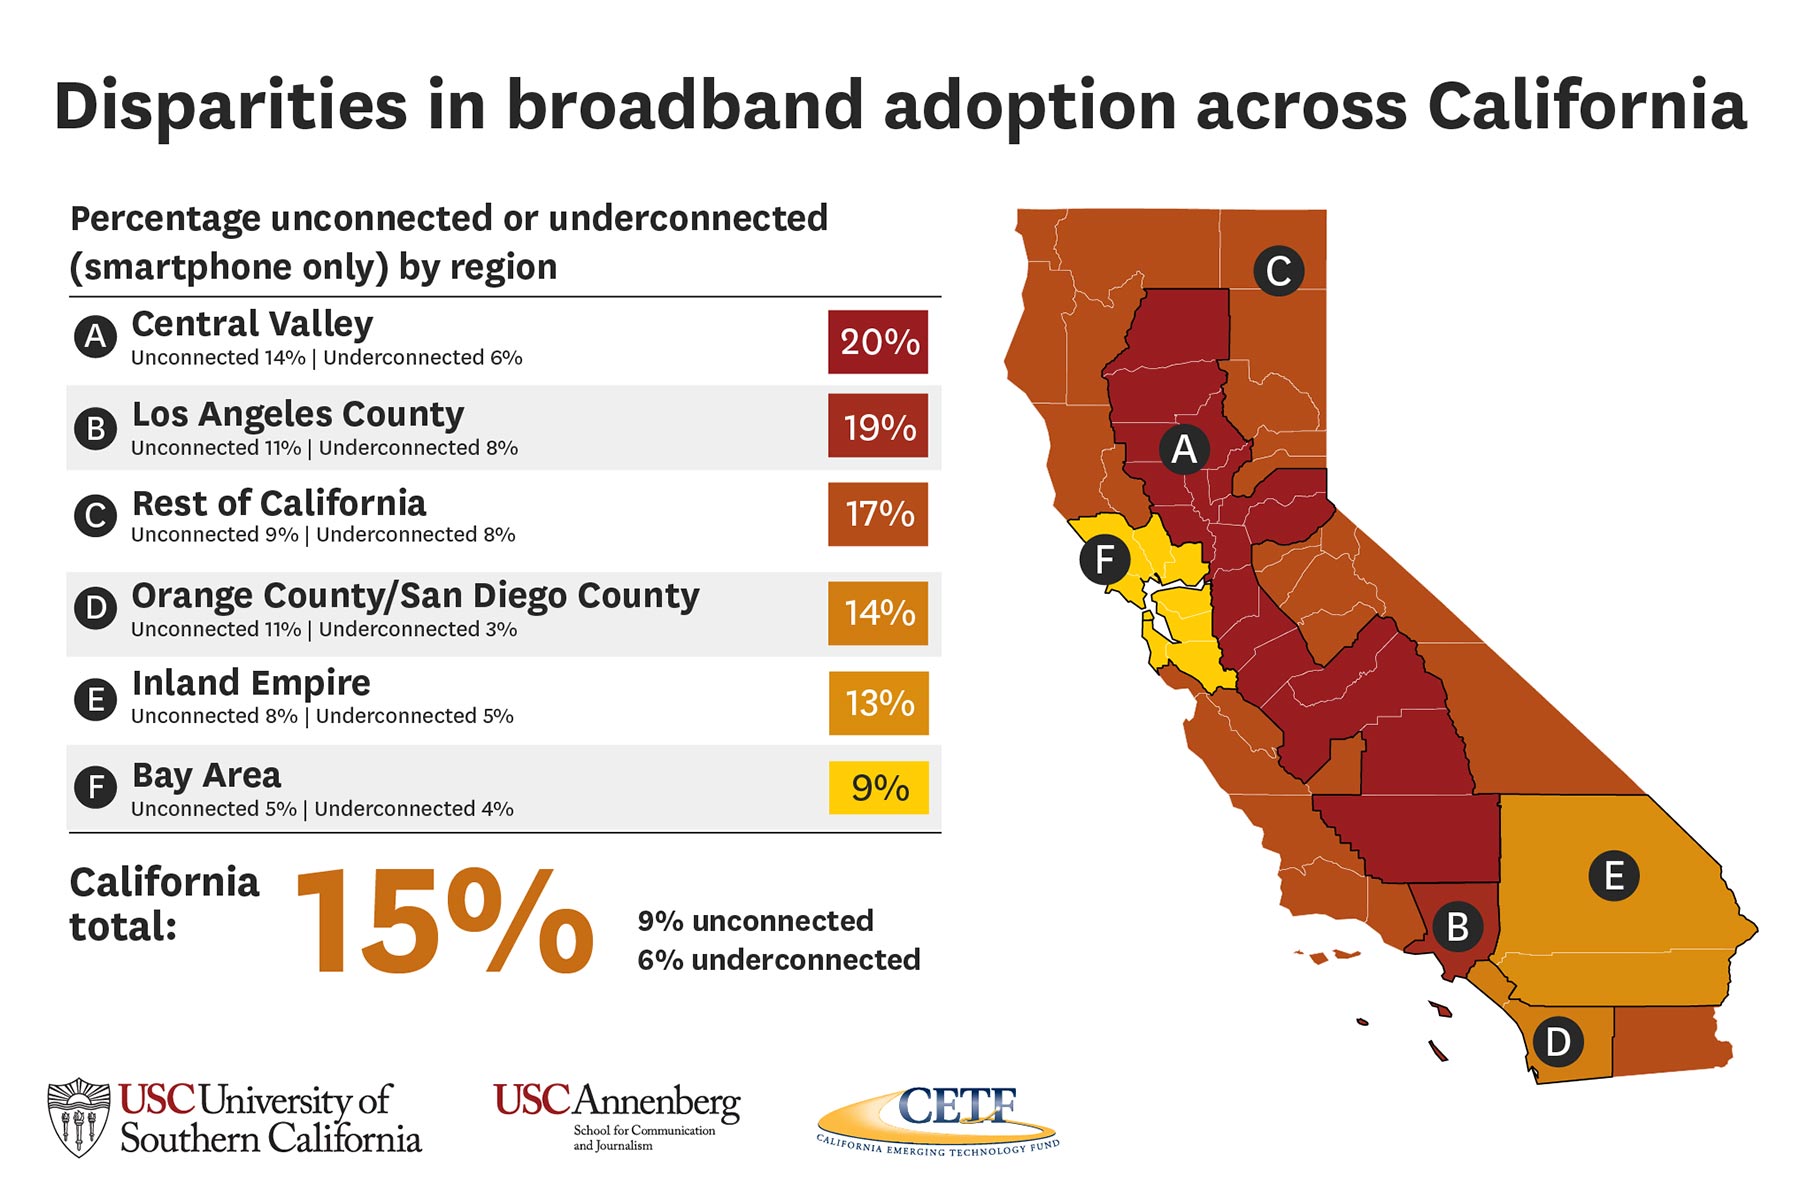 Disparities in broadband adoption across California